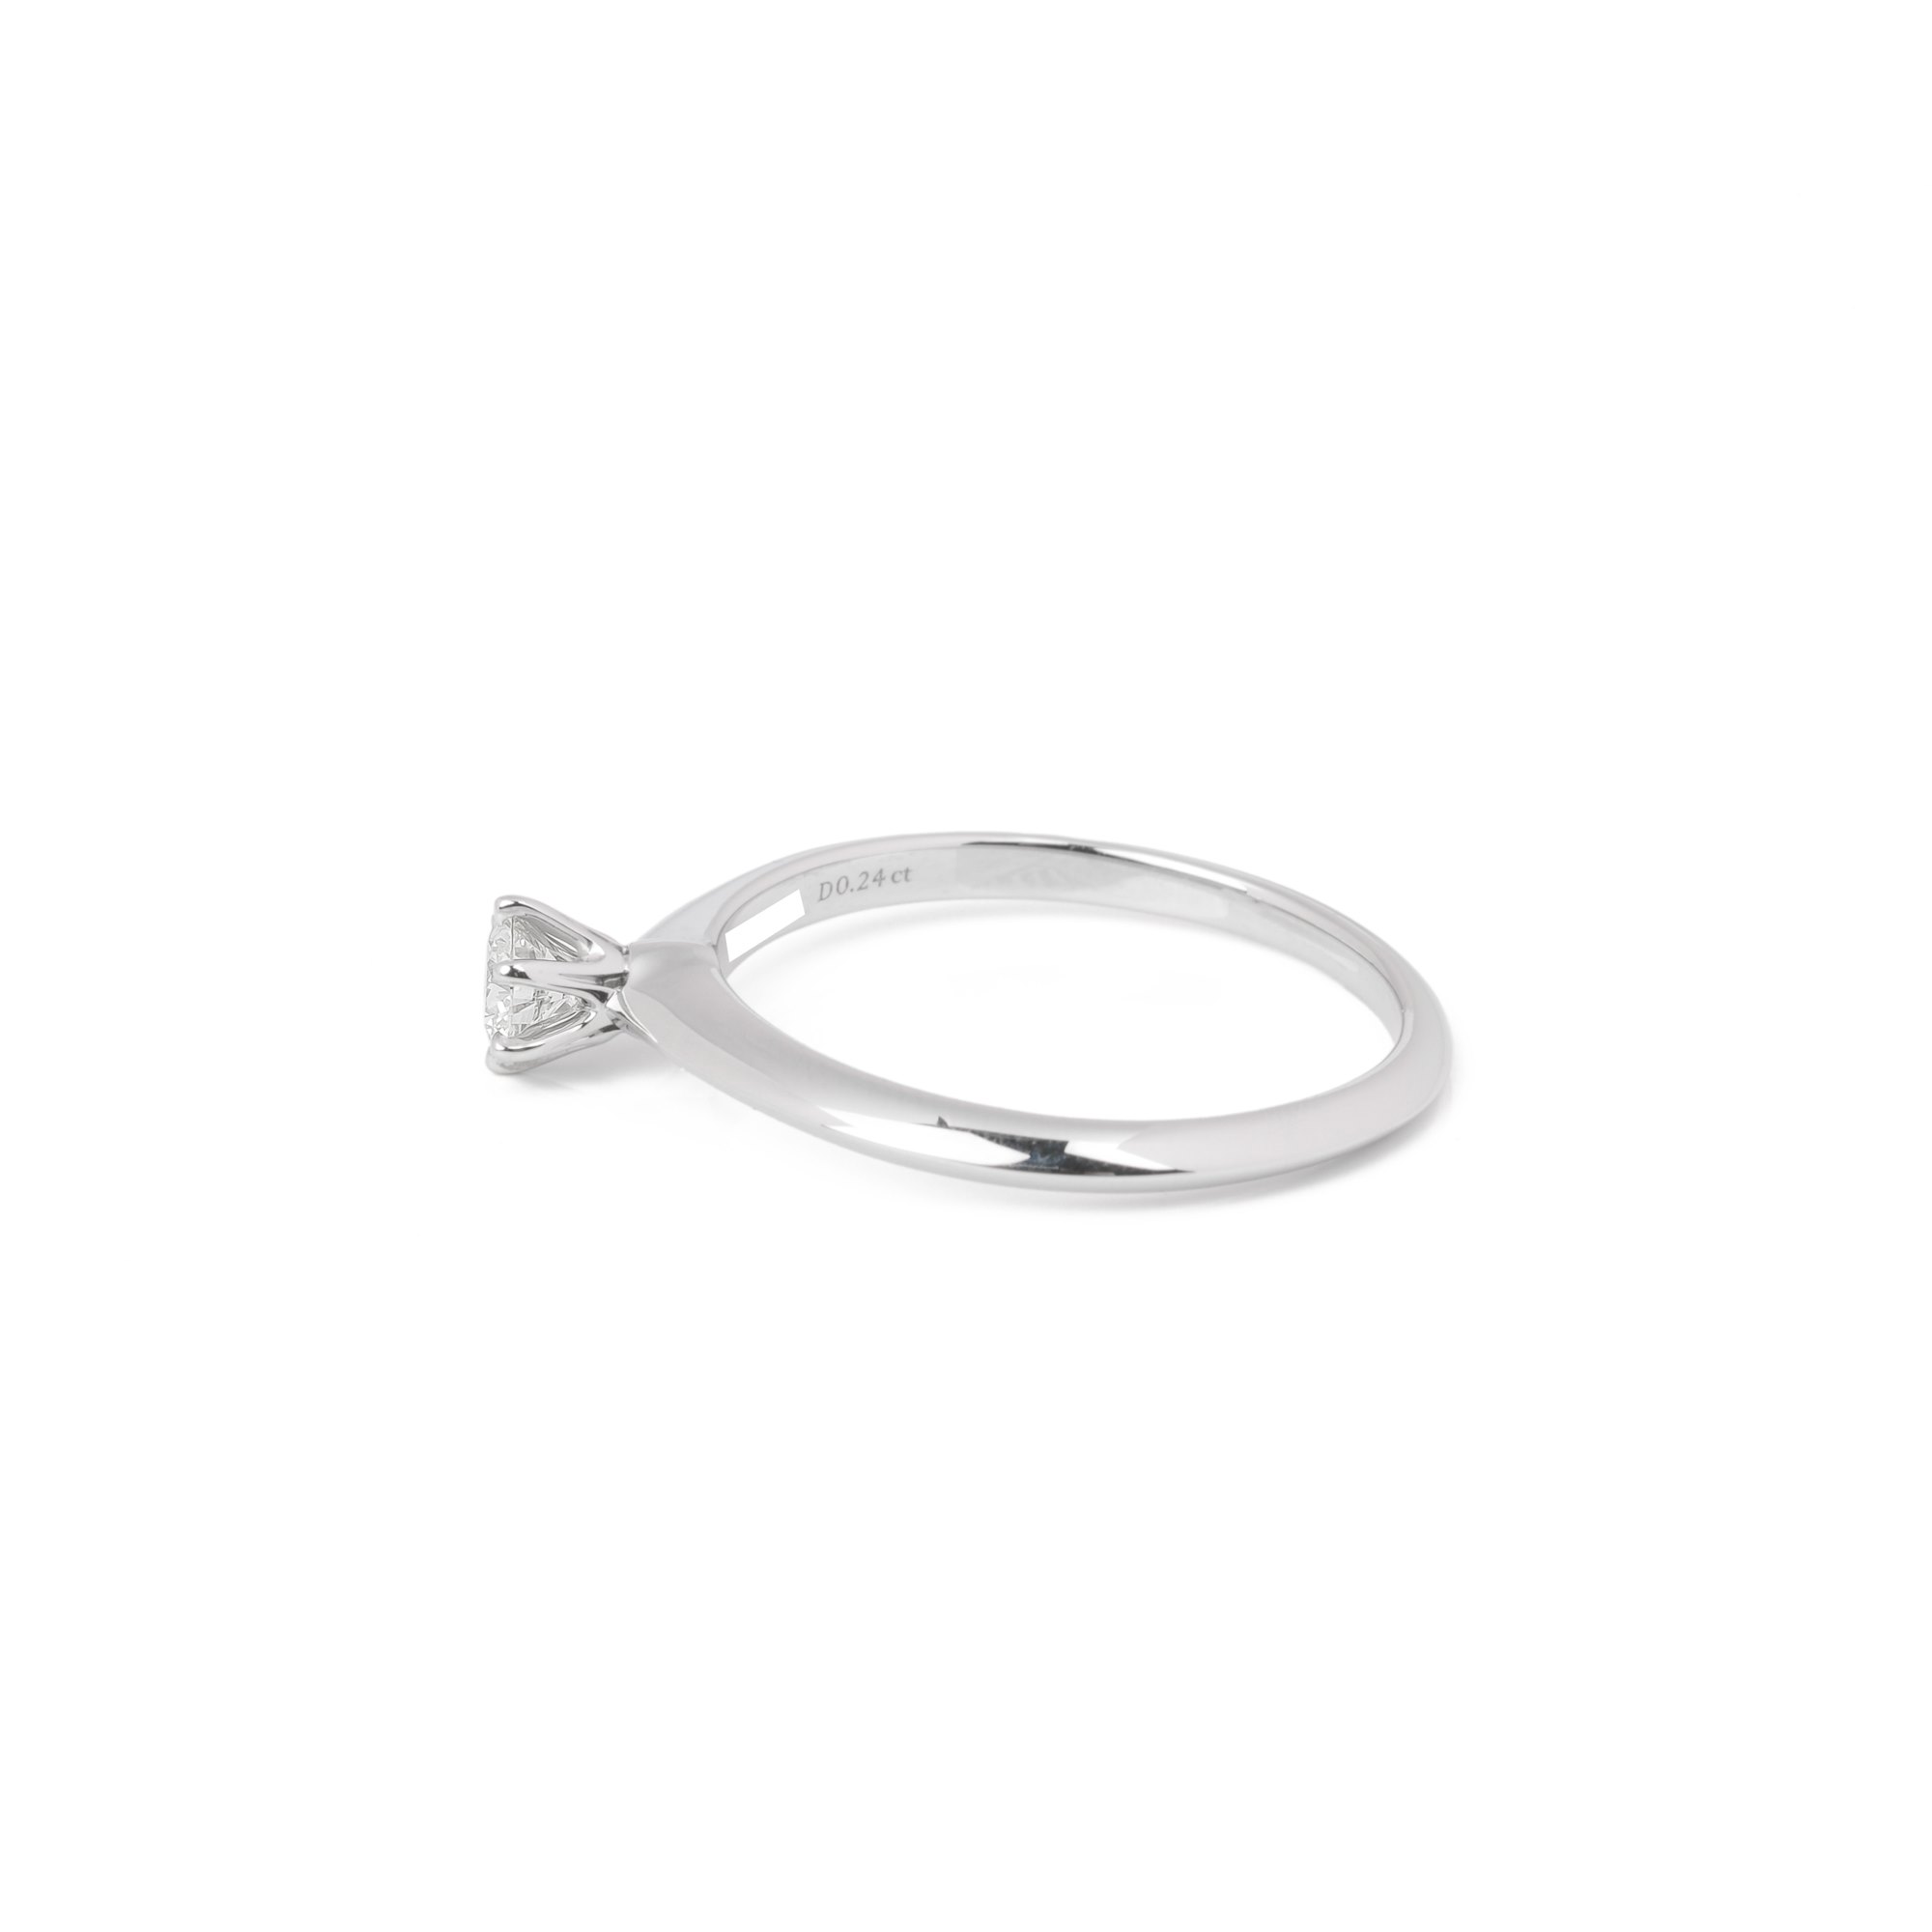 Tiffany & Co. Tiffany Setting 0.24ct Diamond Solitaire Ring